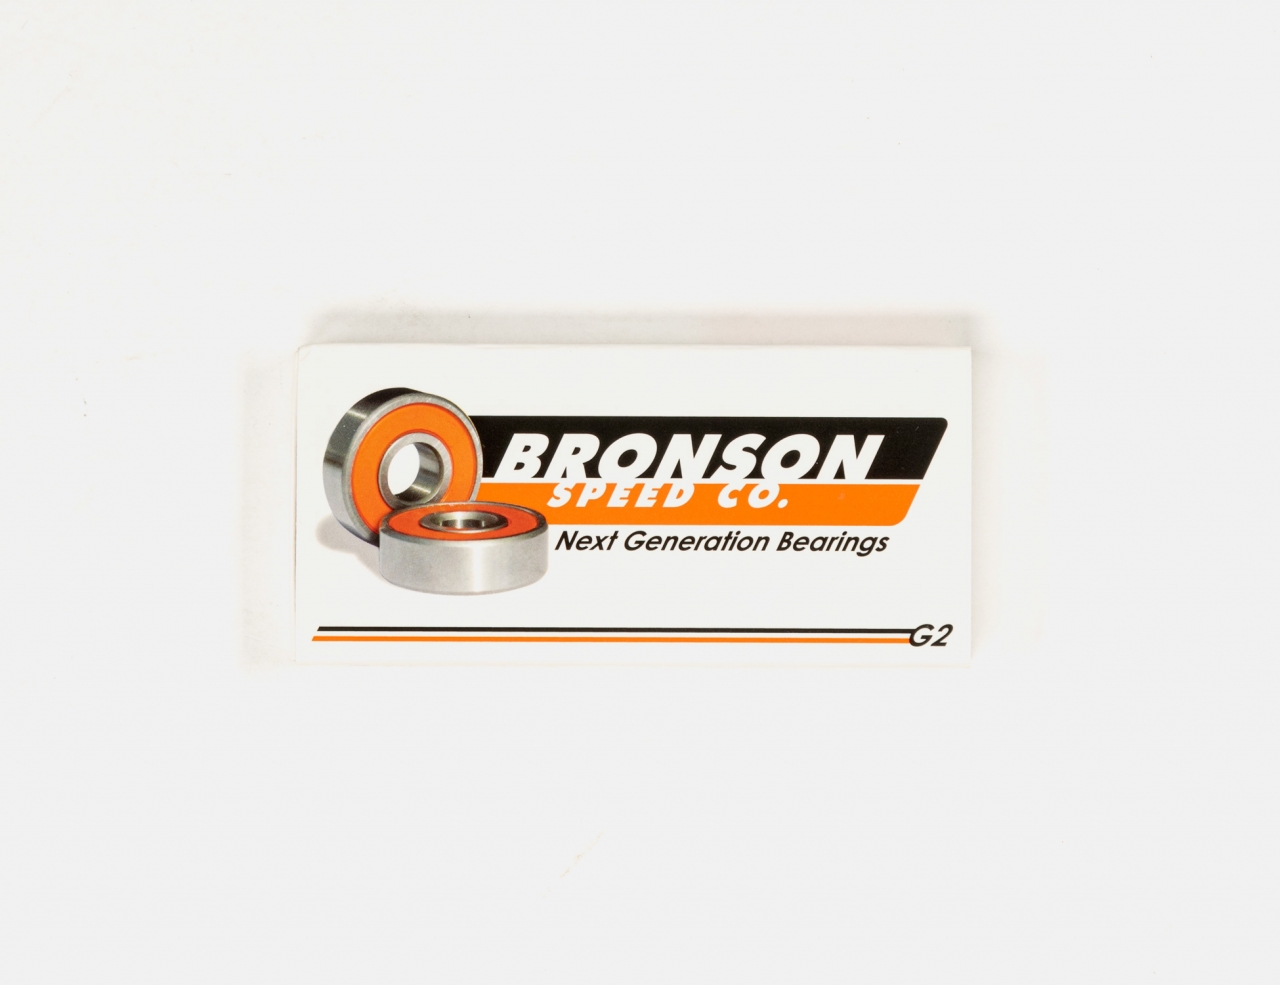 Bronson Speed Co. G2 Bearings - Orange-Silver